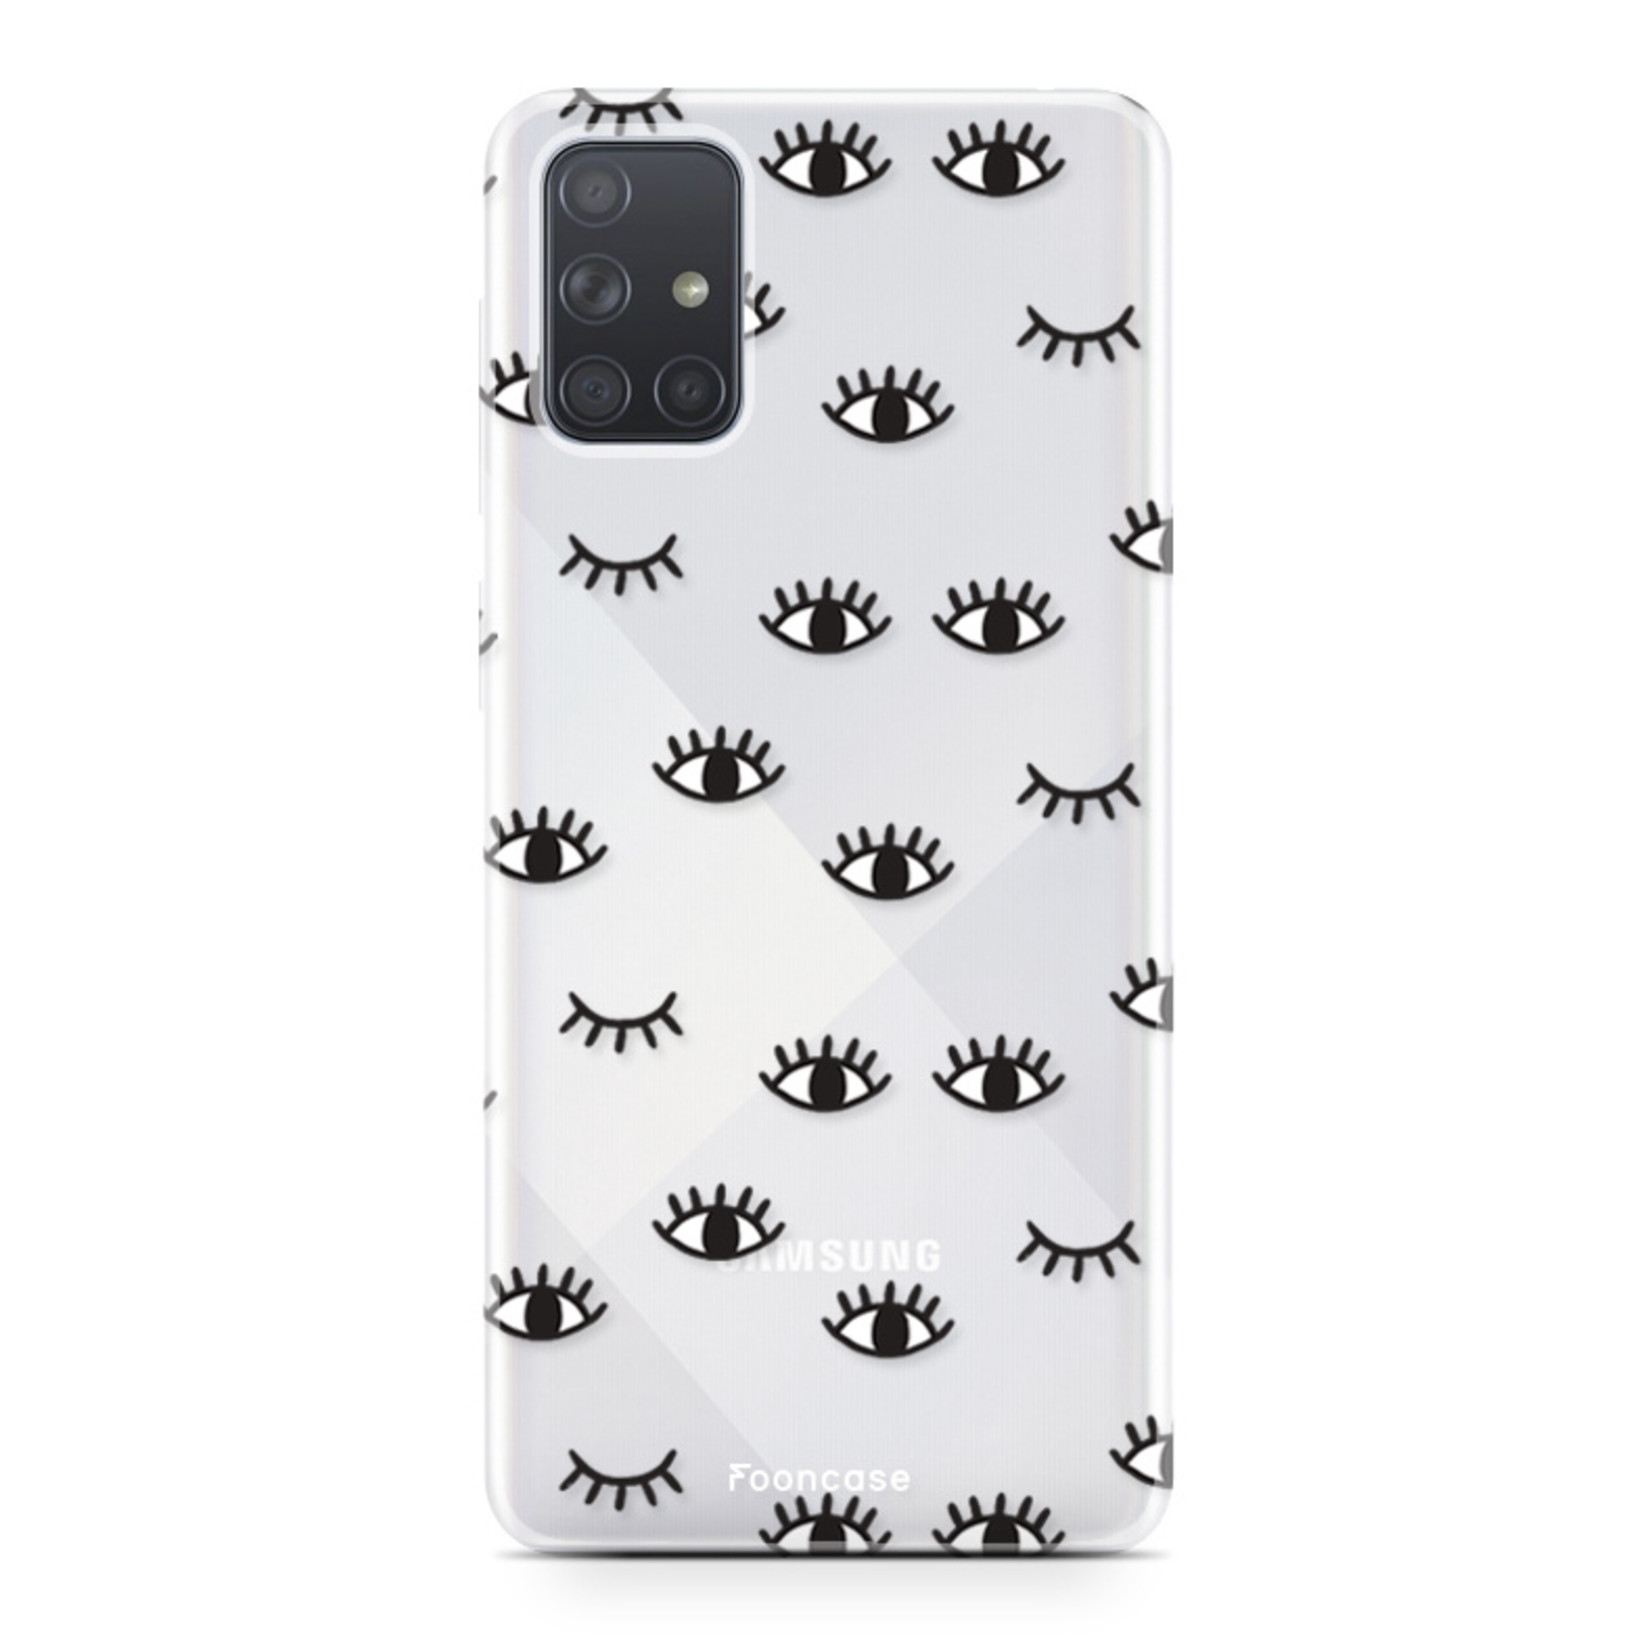 Samsung Galaxy A71 hoesje TPU Soft Case - Back Cover - Eyes / Ogen